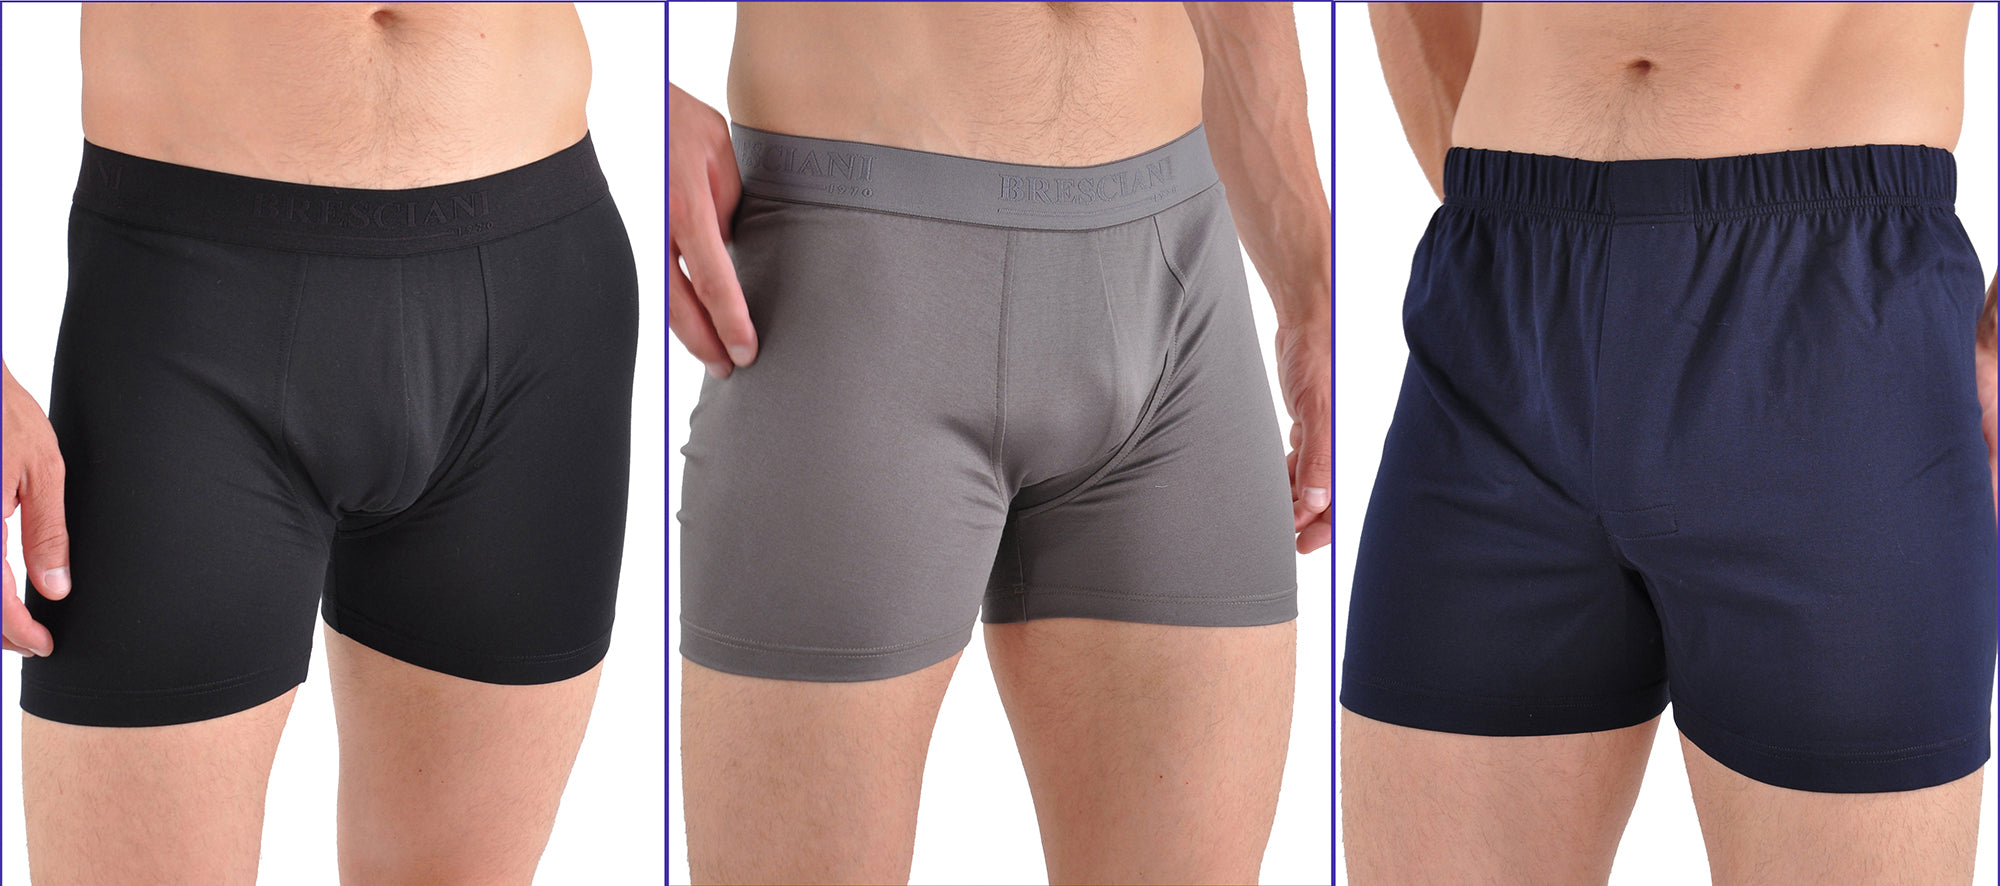 Printed Men Cotton Trunk Underwear, Length: Short, Type: Trunks at